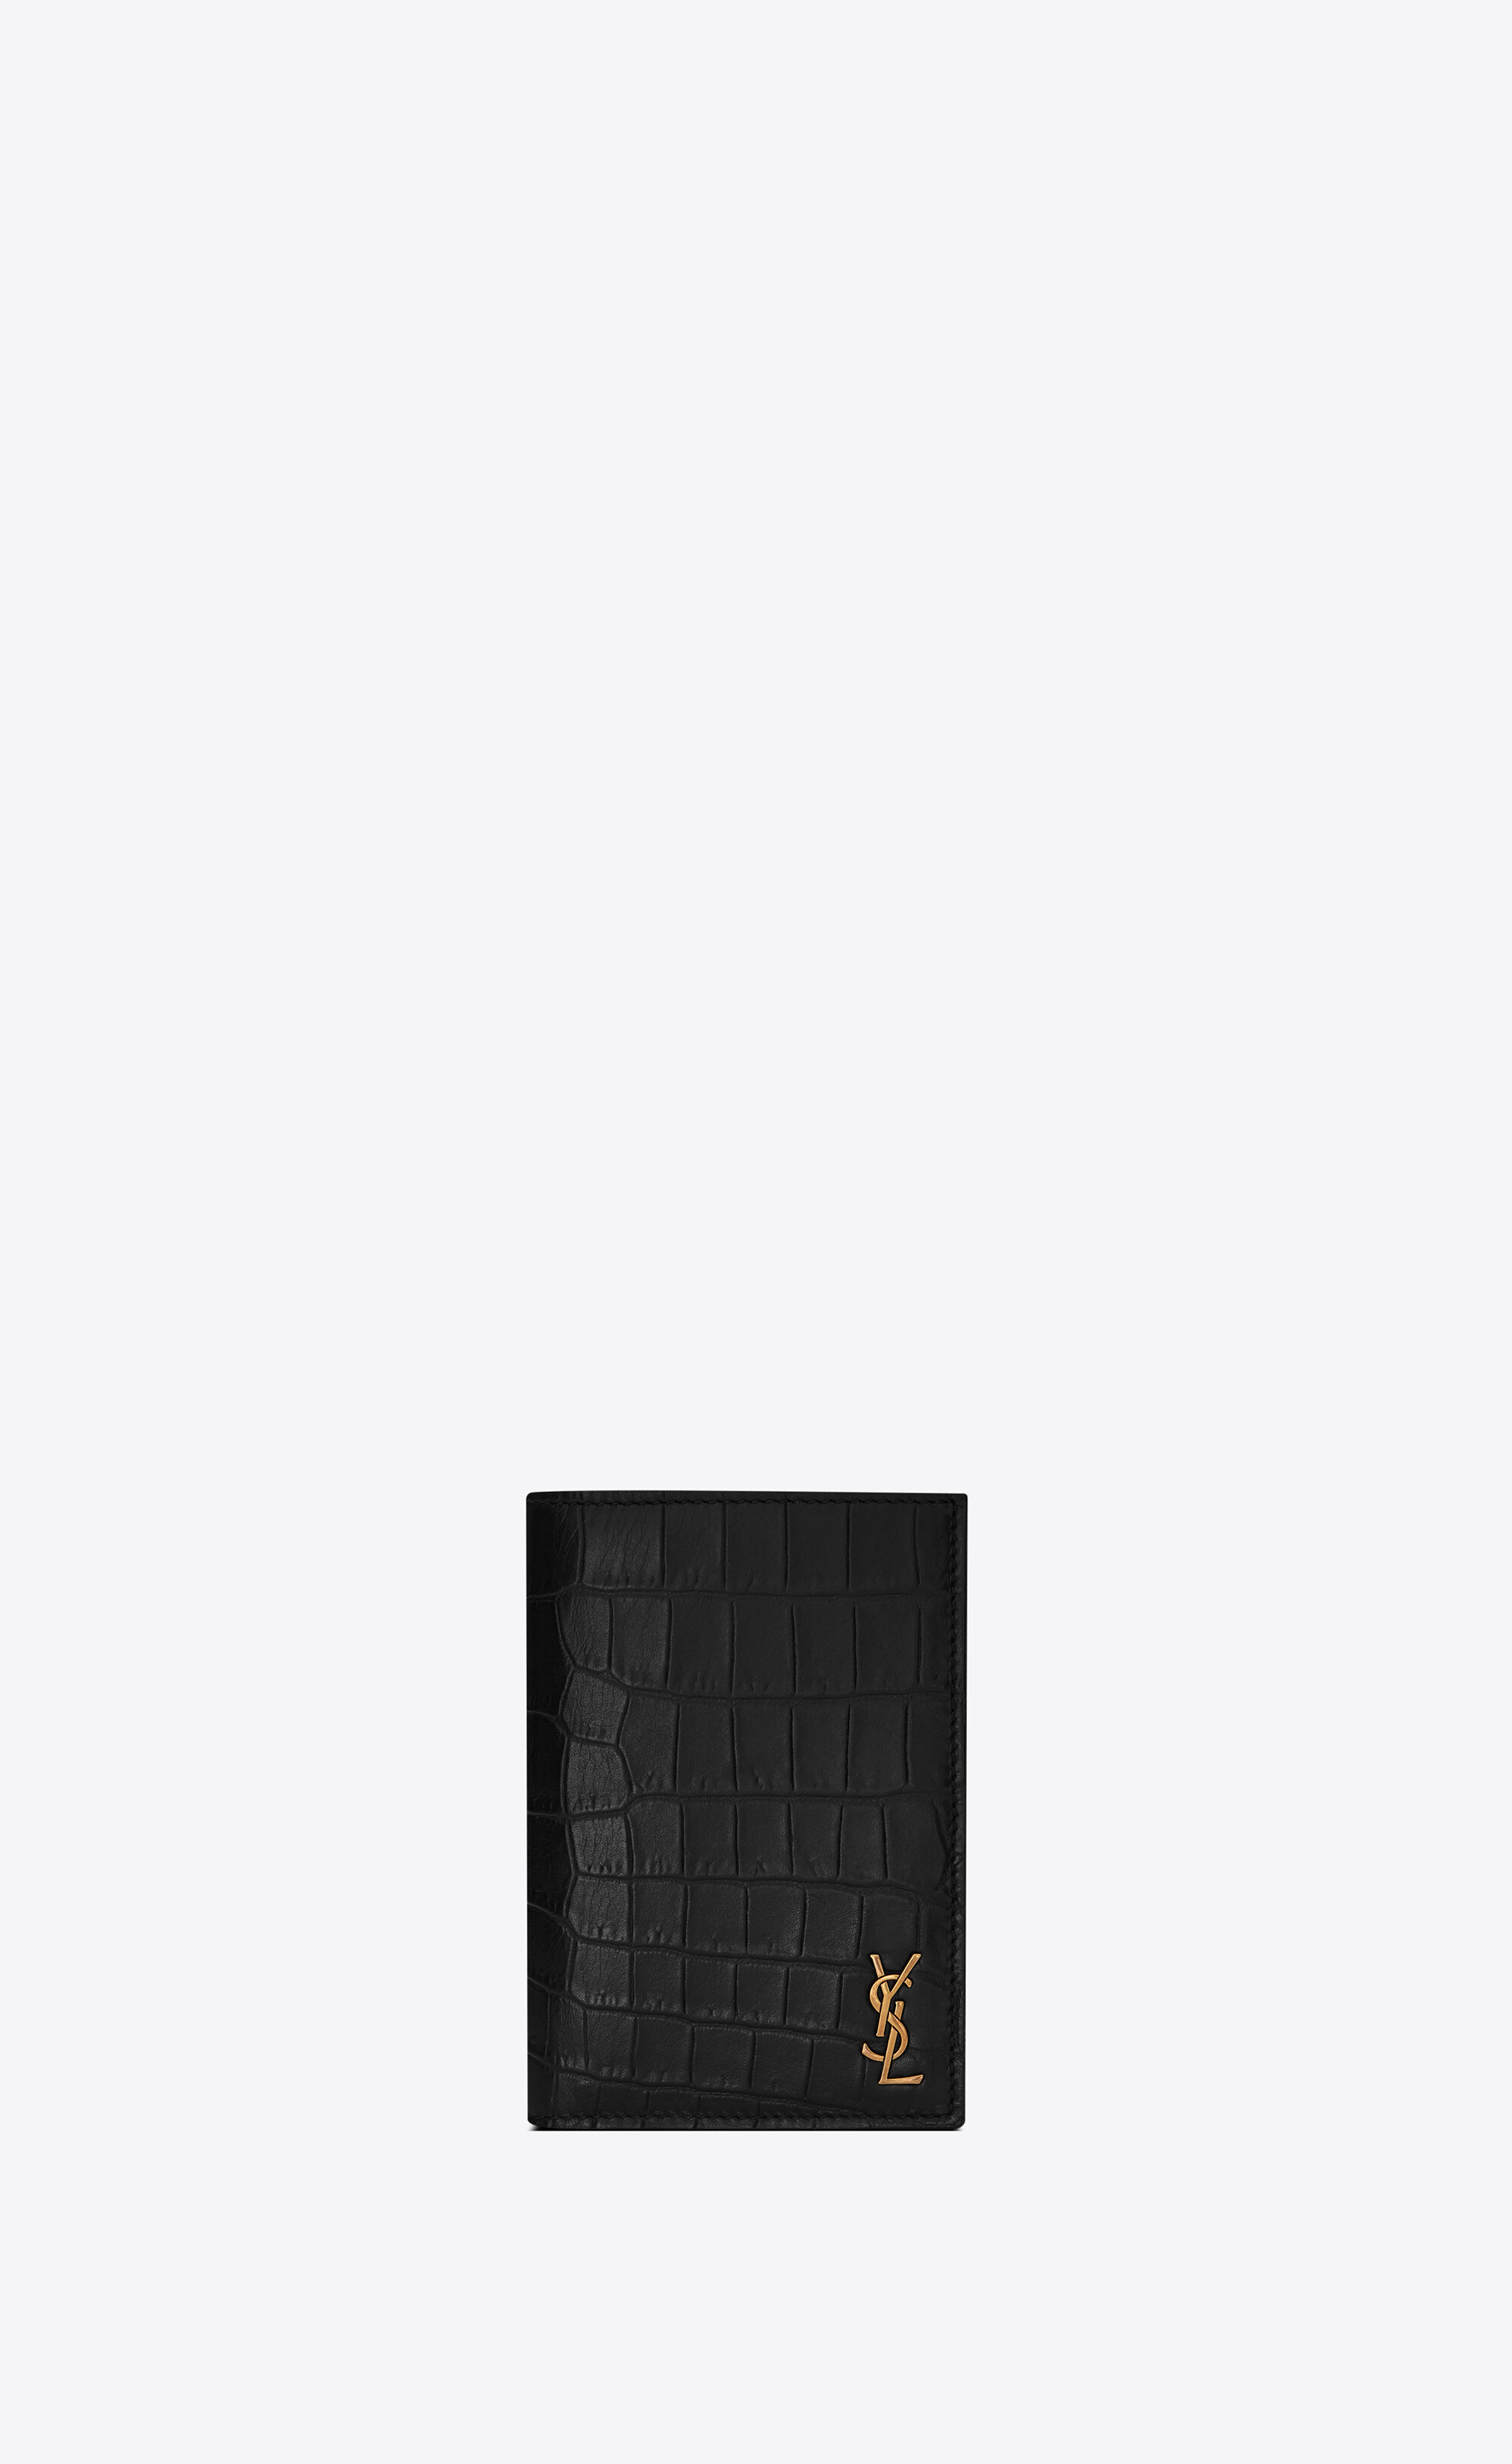 Saint Laurent YSL Monogram Croc-Embossed Leather Card Case, Black